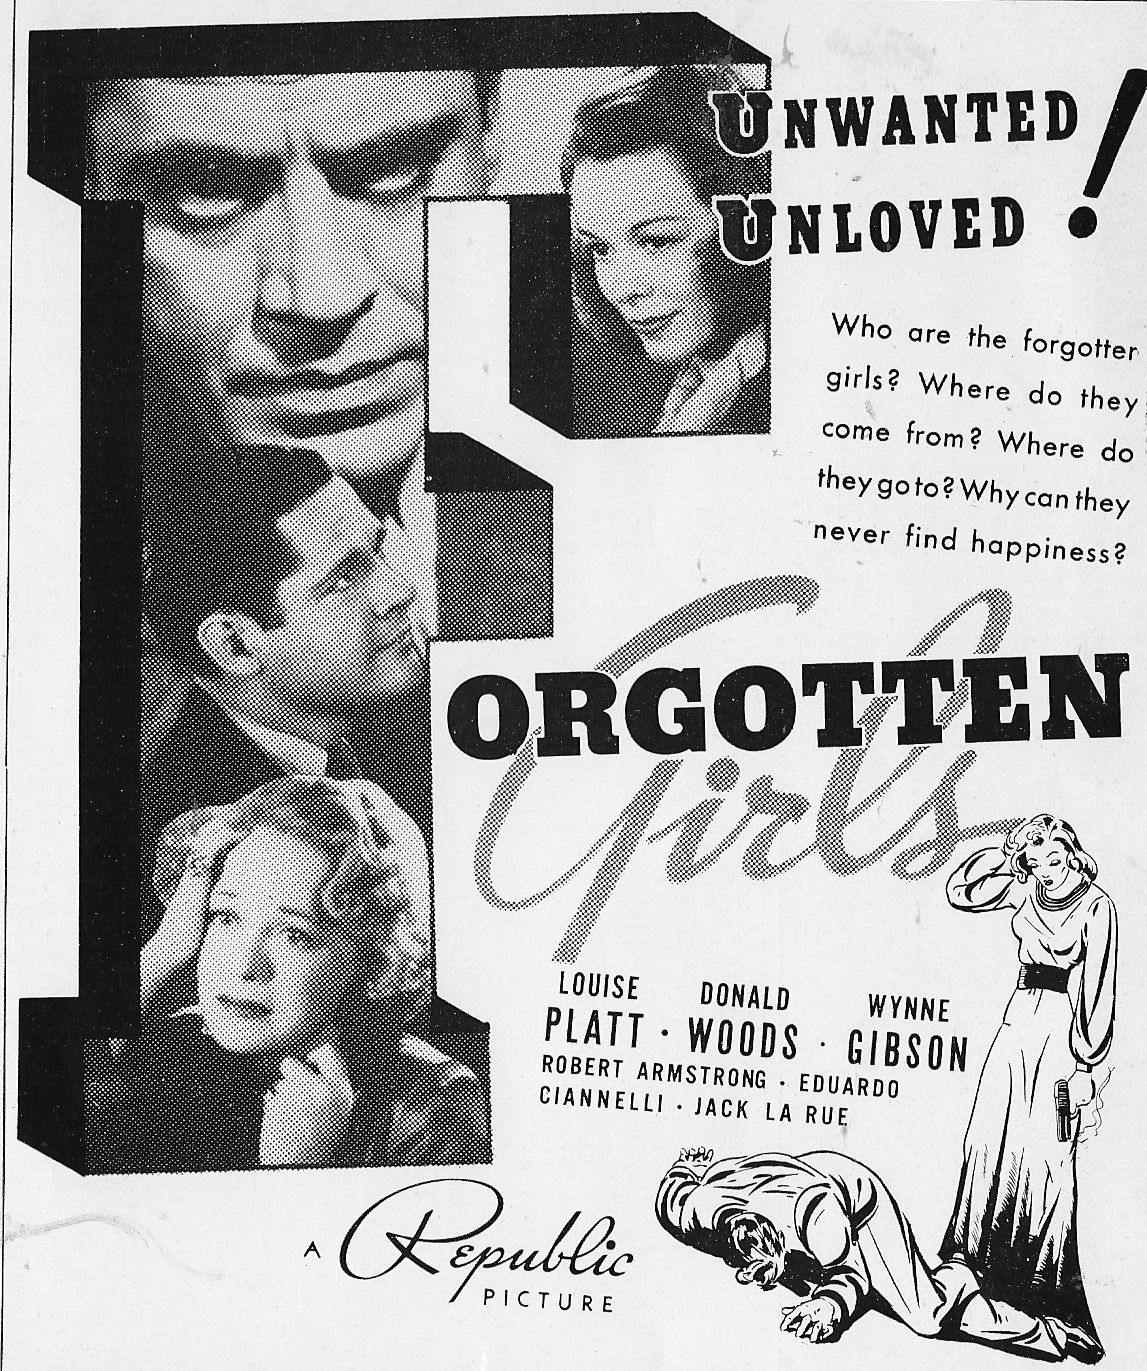 Jack La Rue در صحنه فیلم سینمایی Forgotten Girls به همراه Donald Woods، Wynne Gibson و Louise Platt